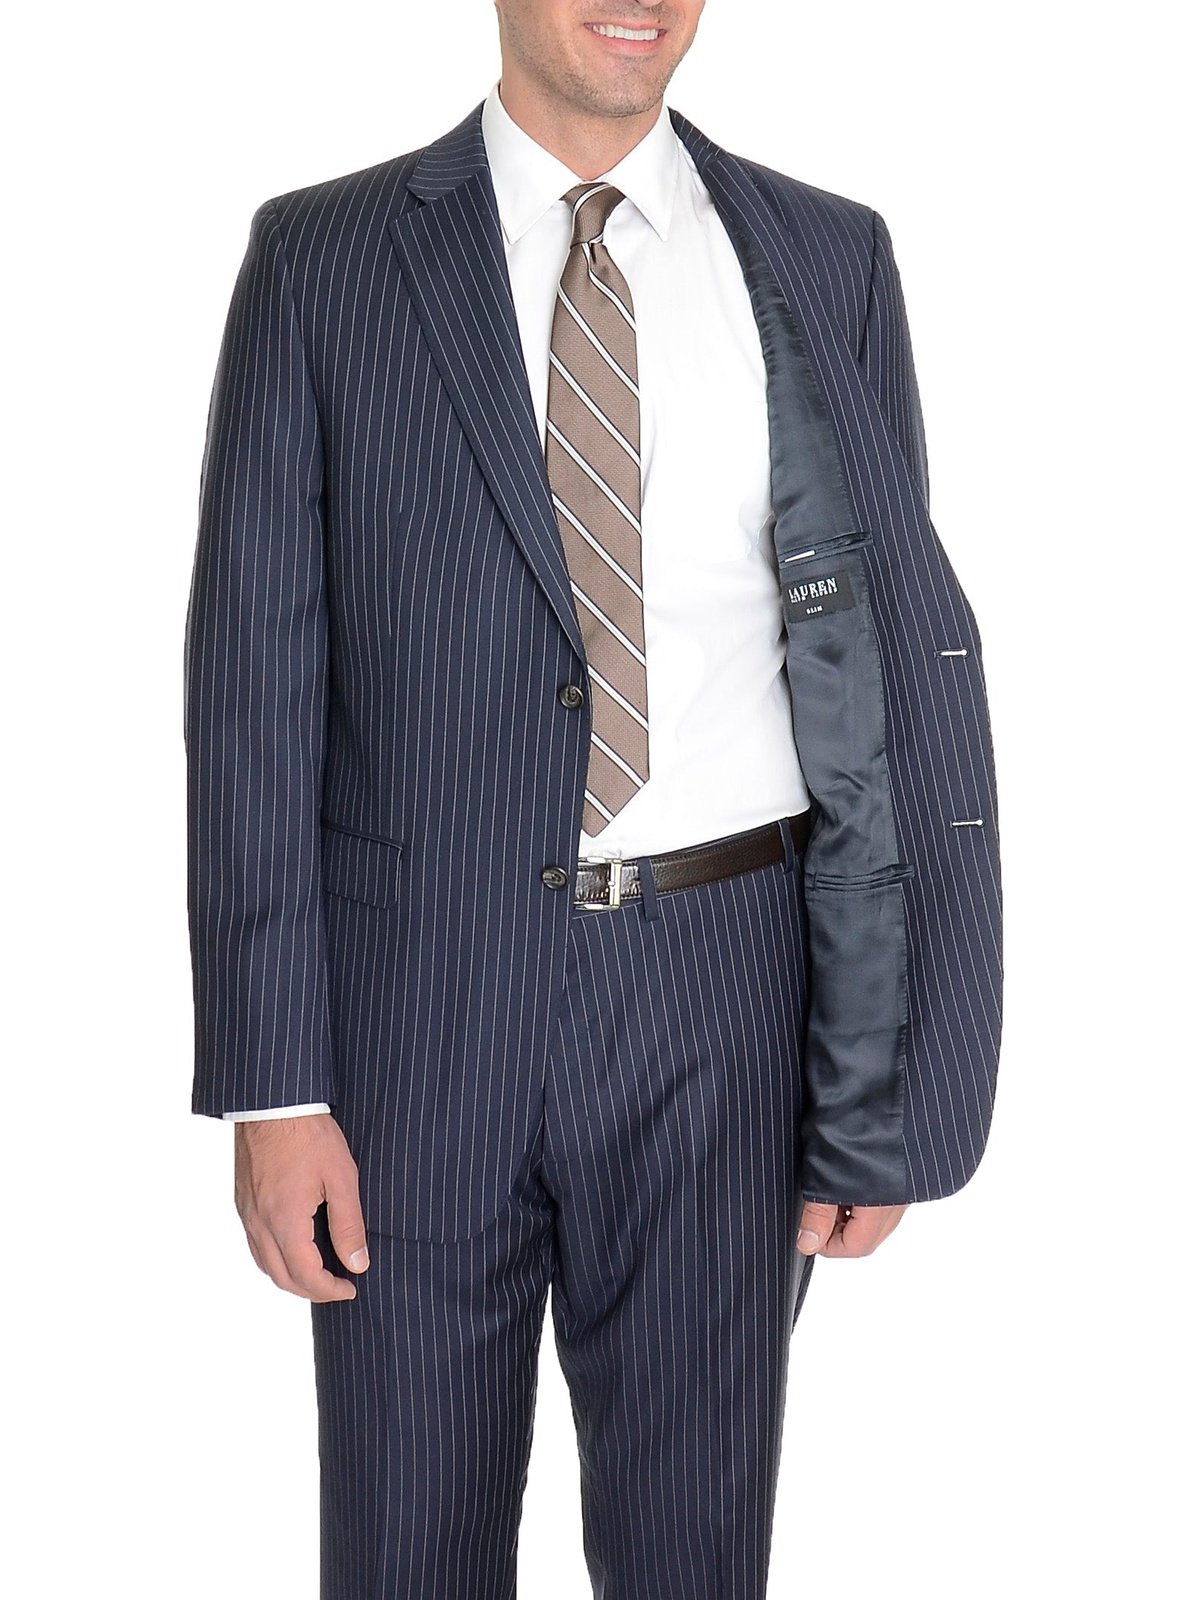 Ralph Lauren Slim Fit  Navy Blue Pinstriped Two Button Wool Suit - The Suit Depot